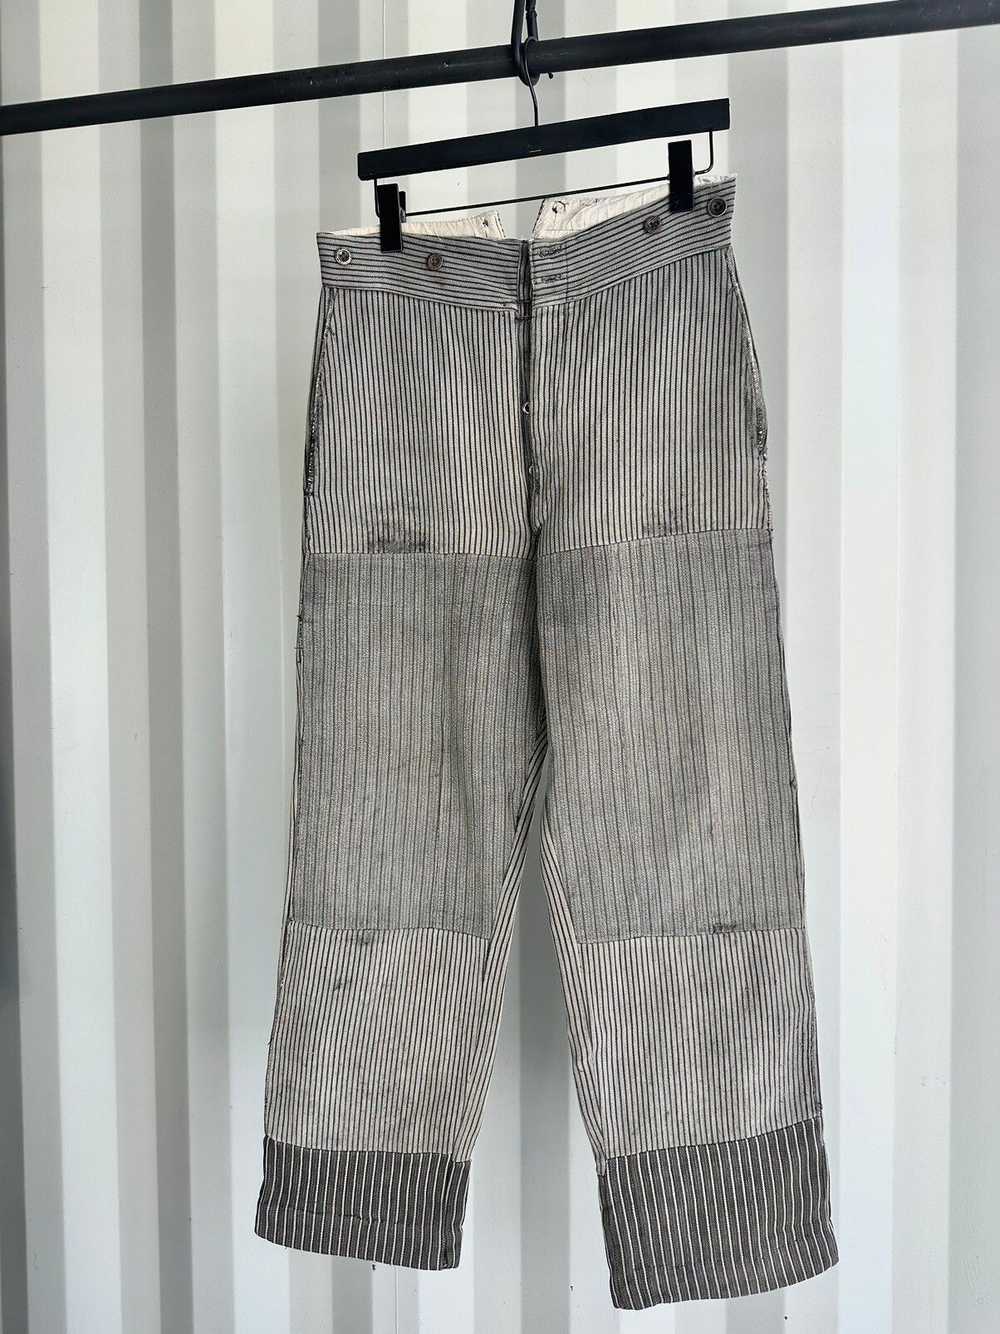 Vintage 20’s French Workwear Chore Pants - image 1